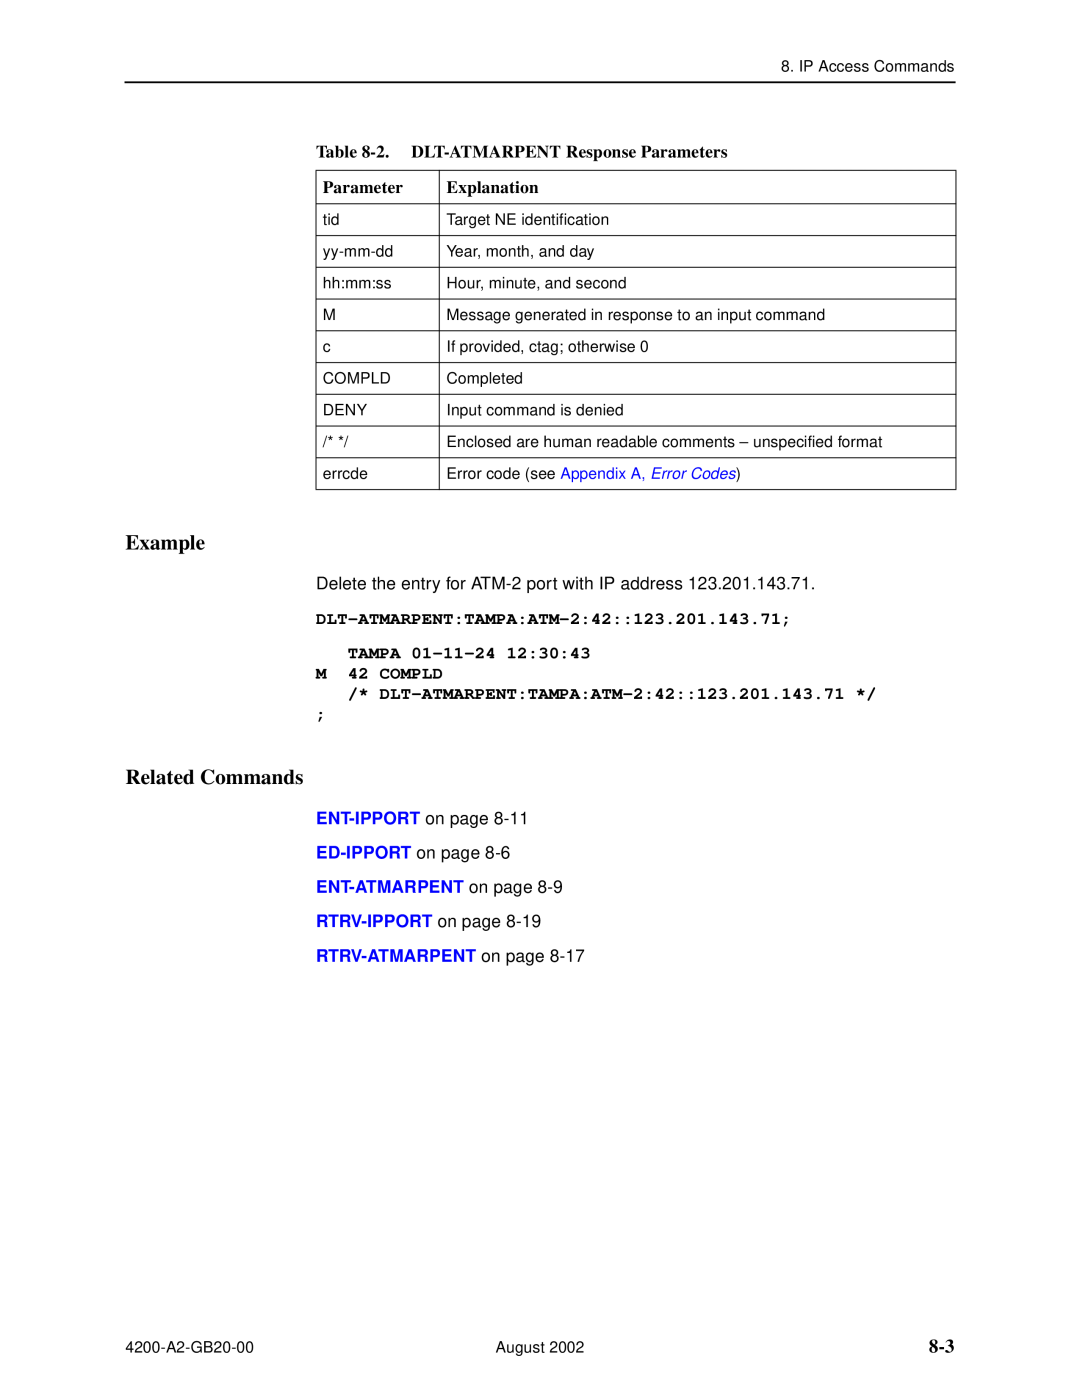 Paradyne 4200 2. DLT-ATMARPENT Response Parameters, DLT-ATMARPENTTAMPAATM-242123.201.143.71 TAMPA 01-11-24 M 42 COMPLD 